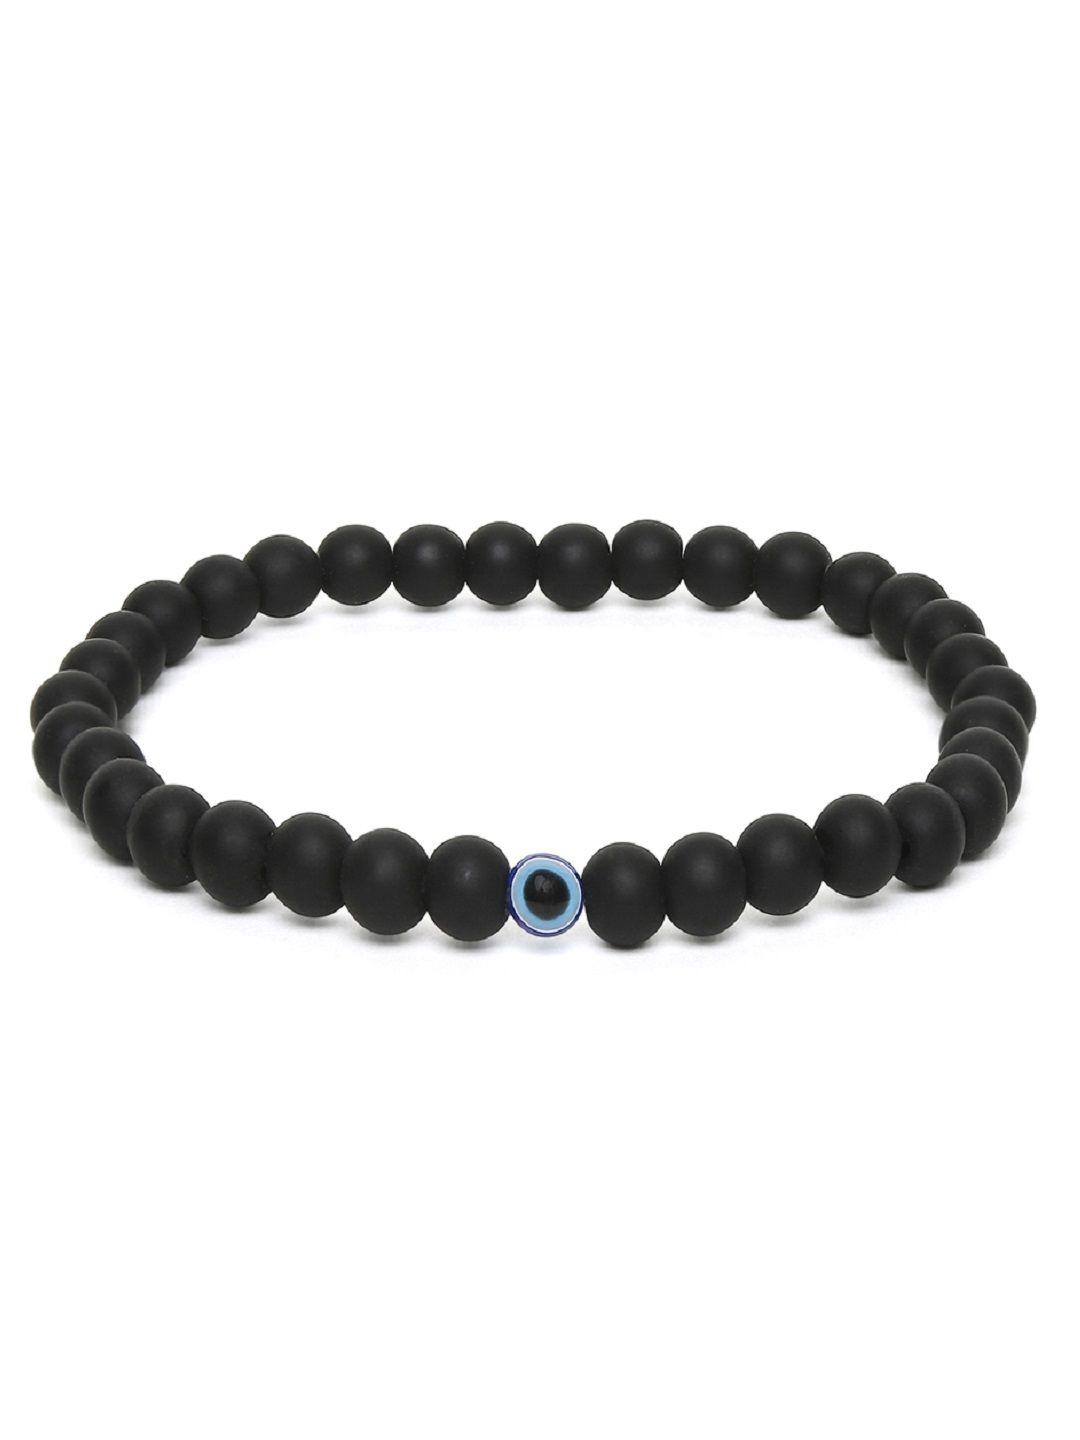 oomph women black & blue handcrafted goodluck evil eye beads elasticated bracelet